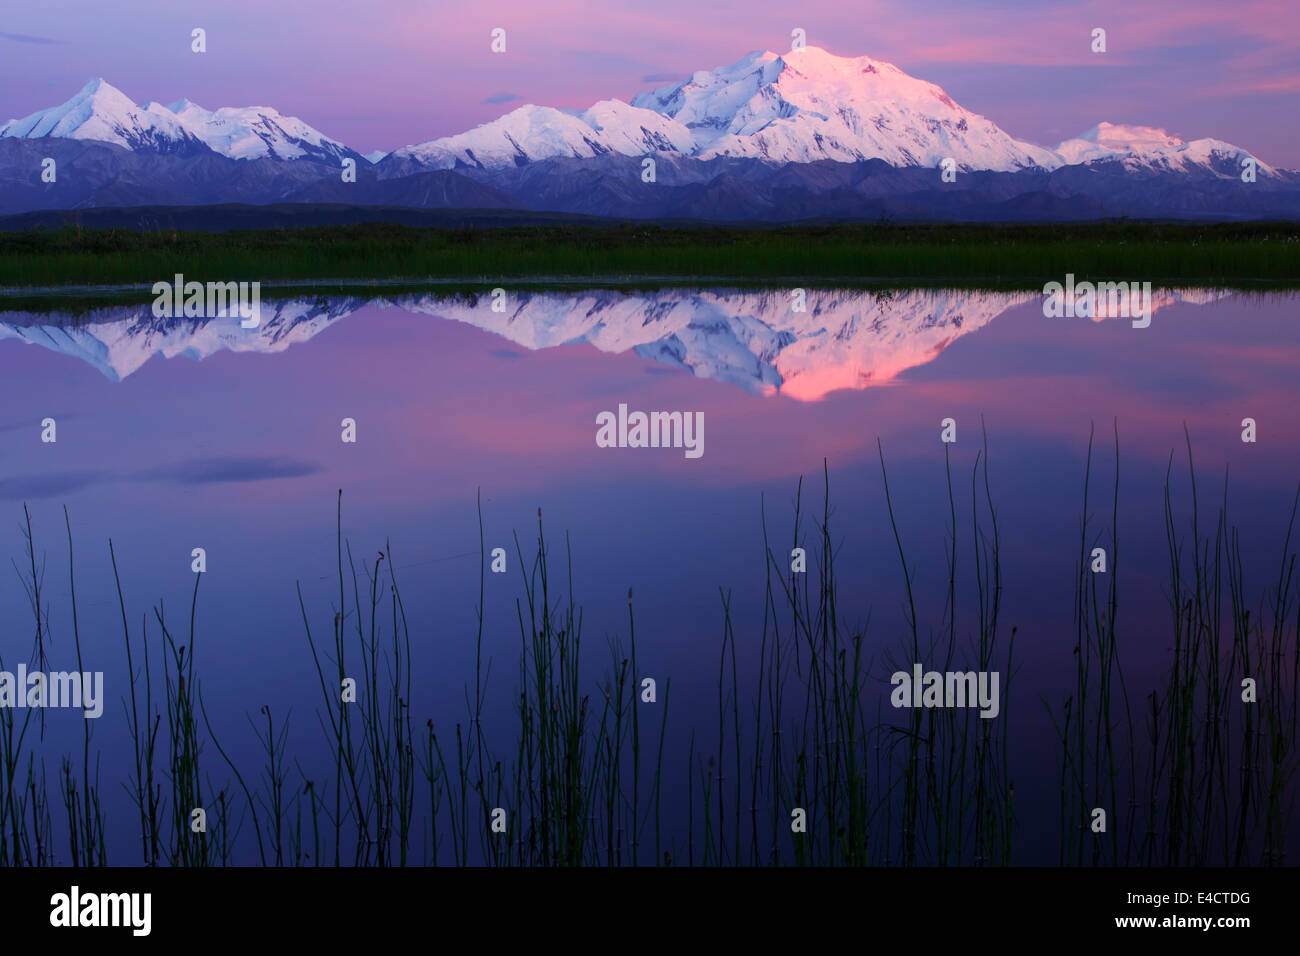 Mt. McKinley, also known as Denali, Denali National Park, Alaska.  Stock Photo